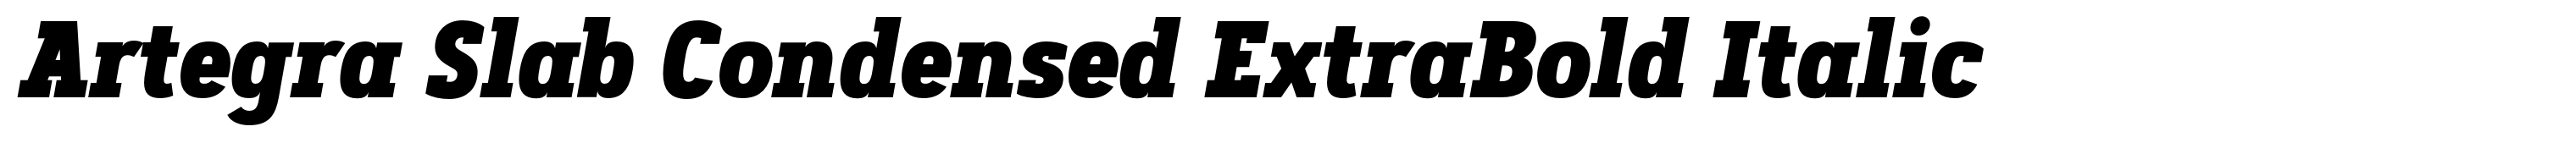 Artegra Slab Condensed ExtraBold Italic